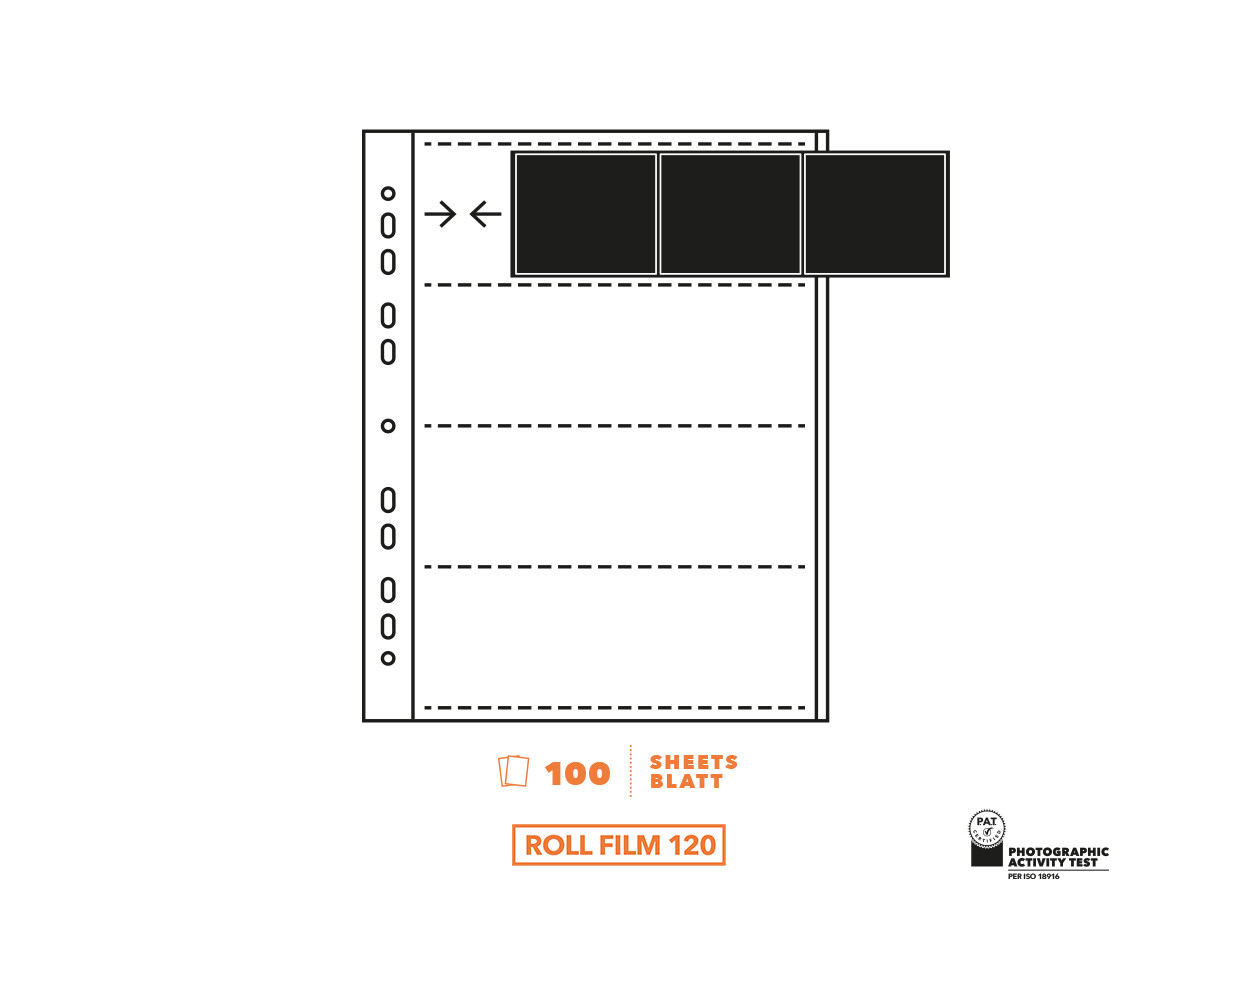 Peva Pergamin negative sleeves for 120 roll film (6x6 / 6x7) 25 sheets